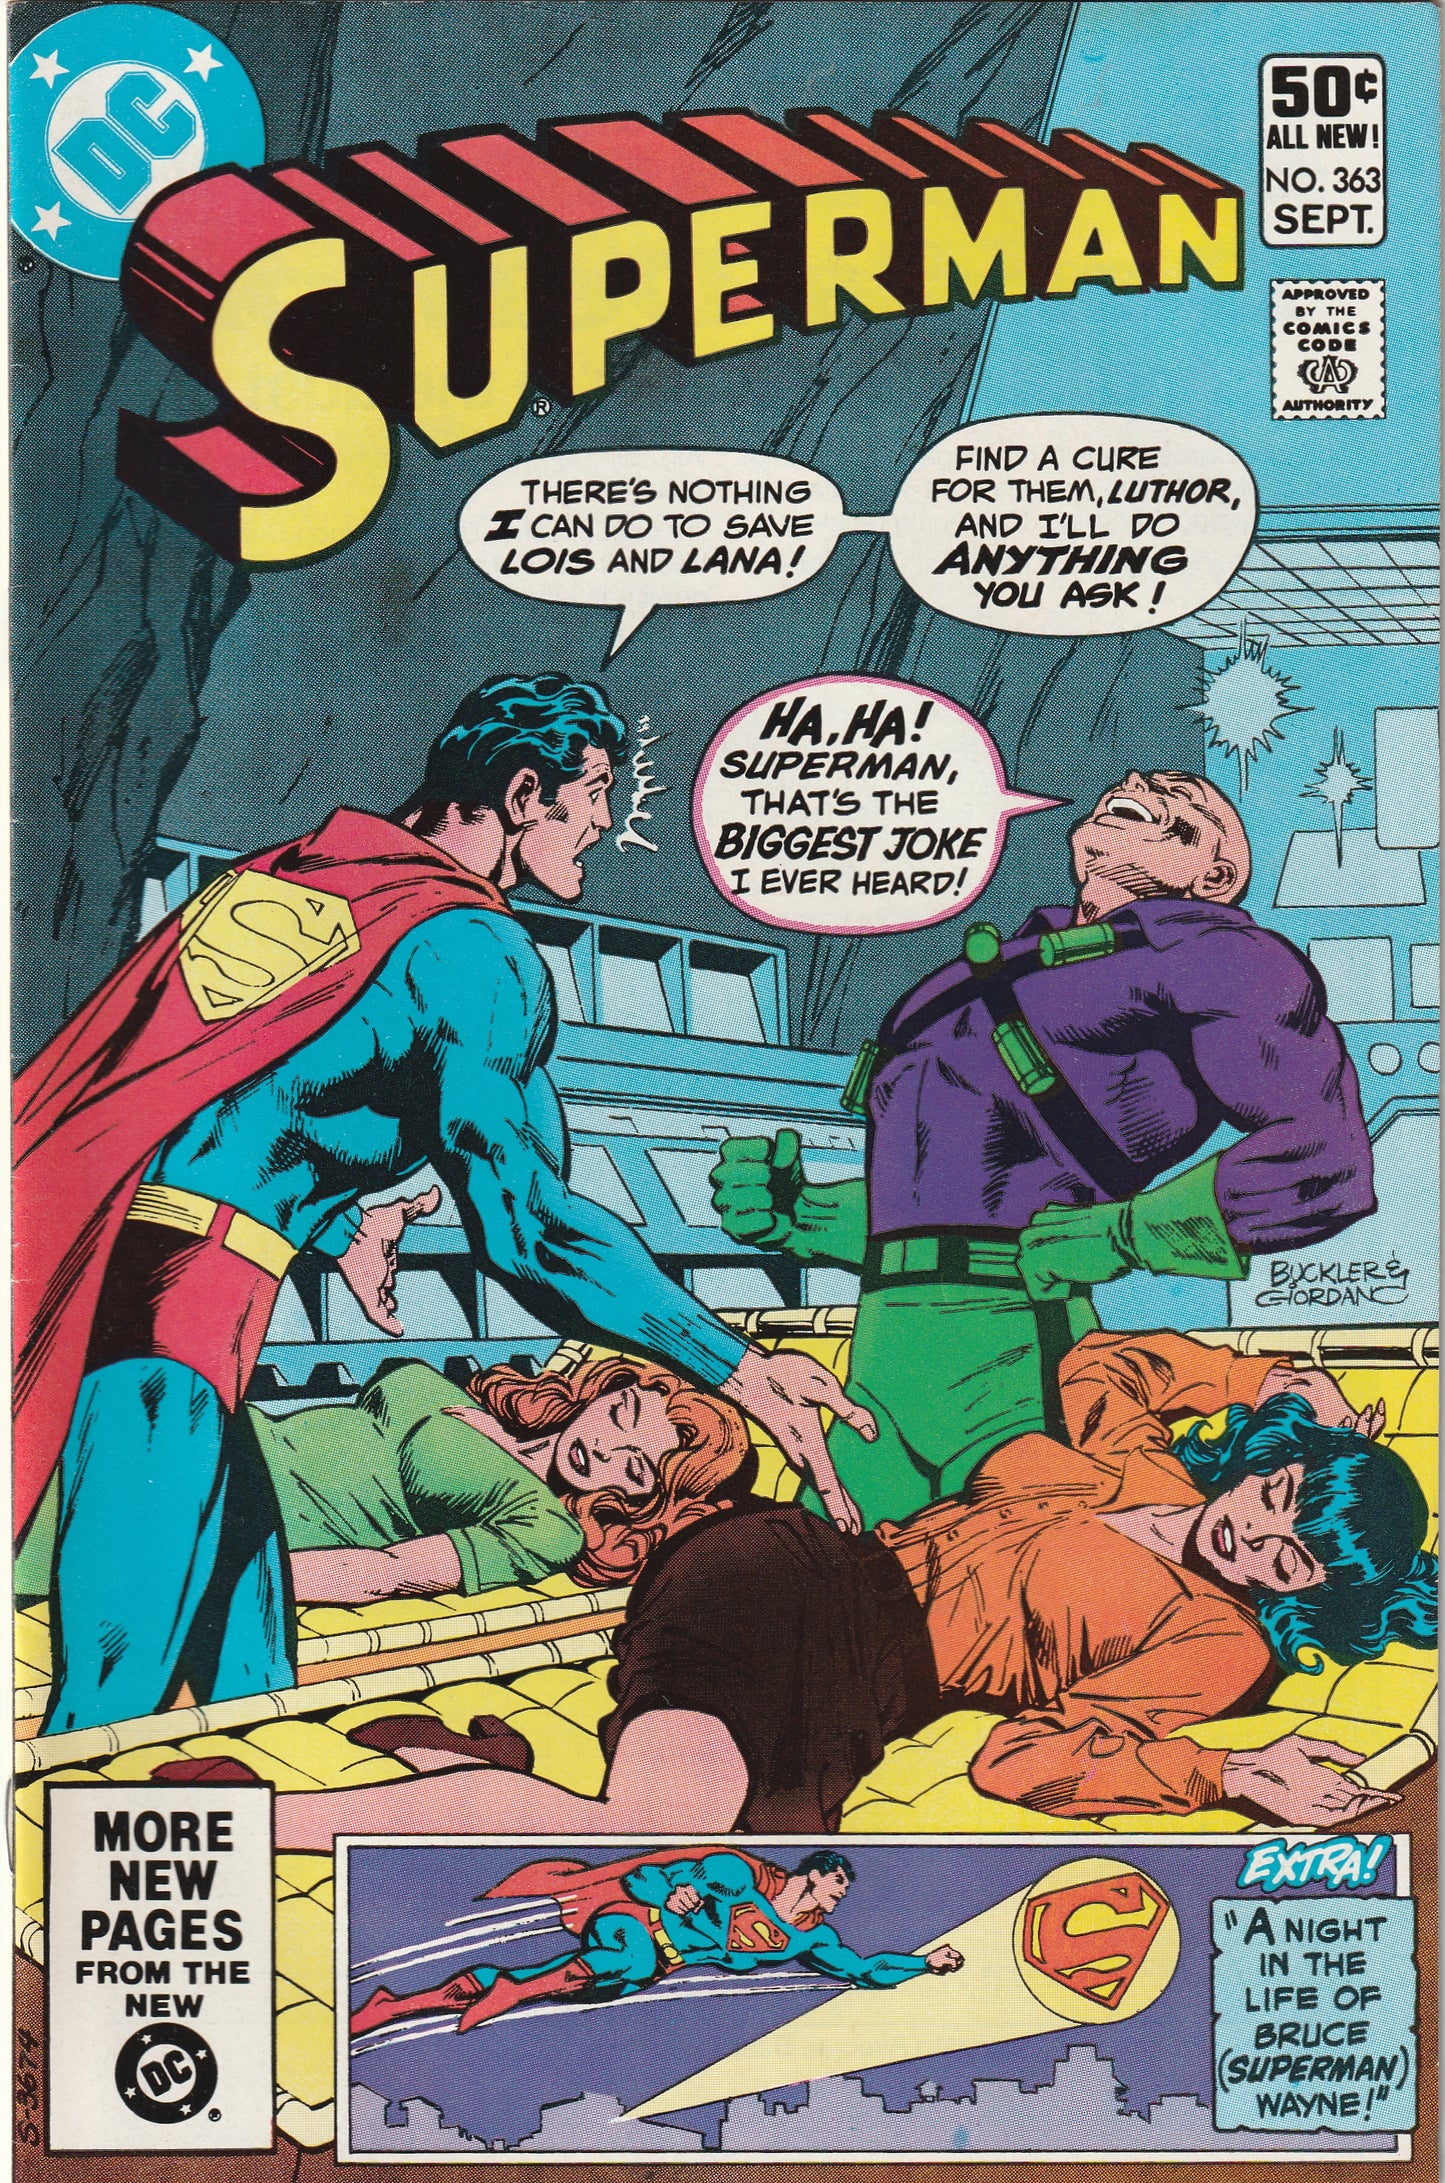 Superman #363 (1981)